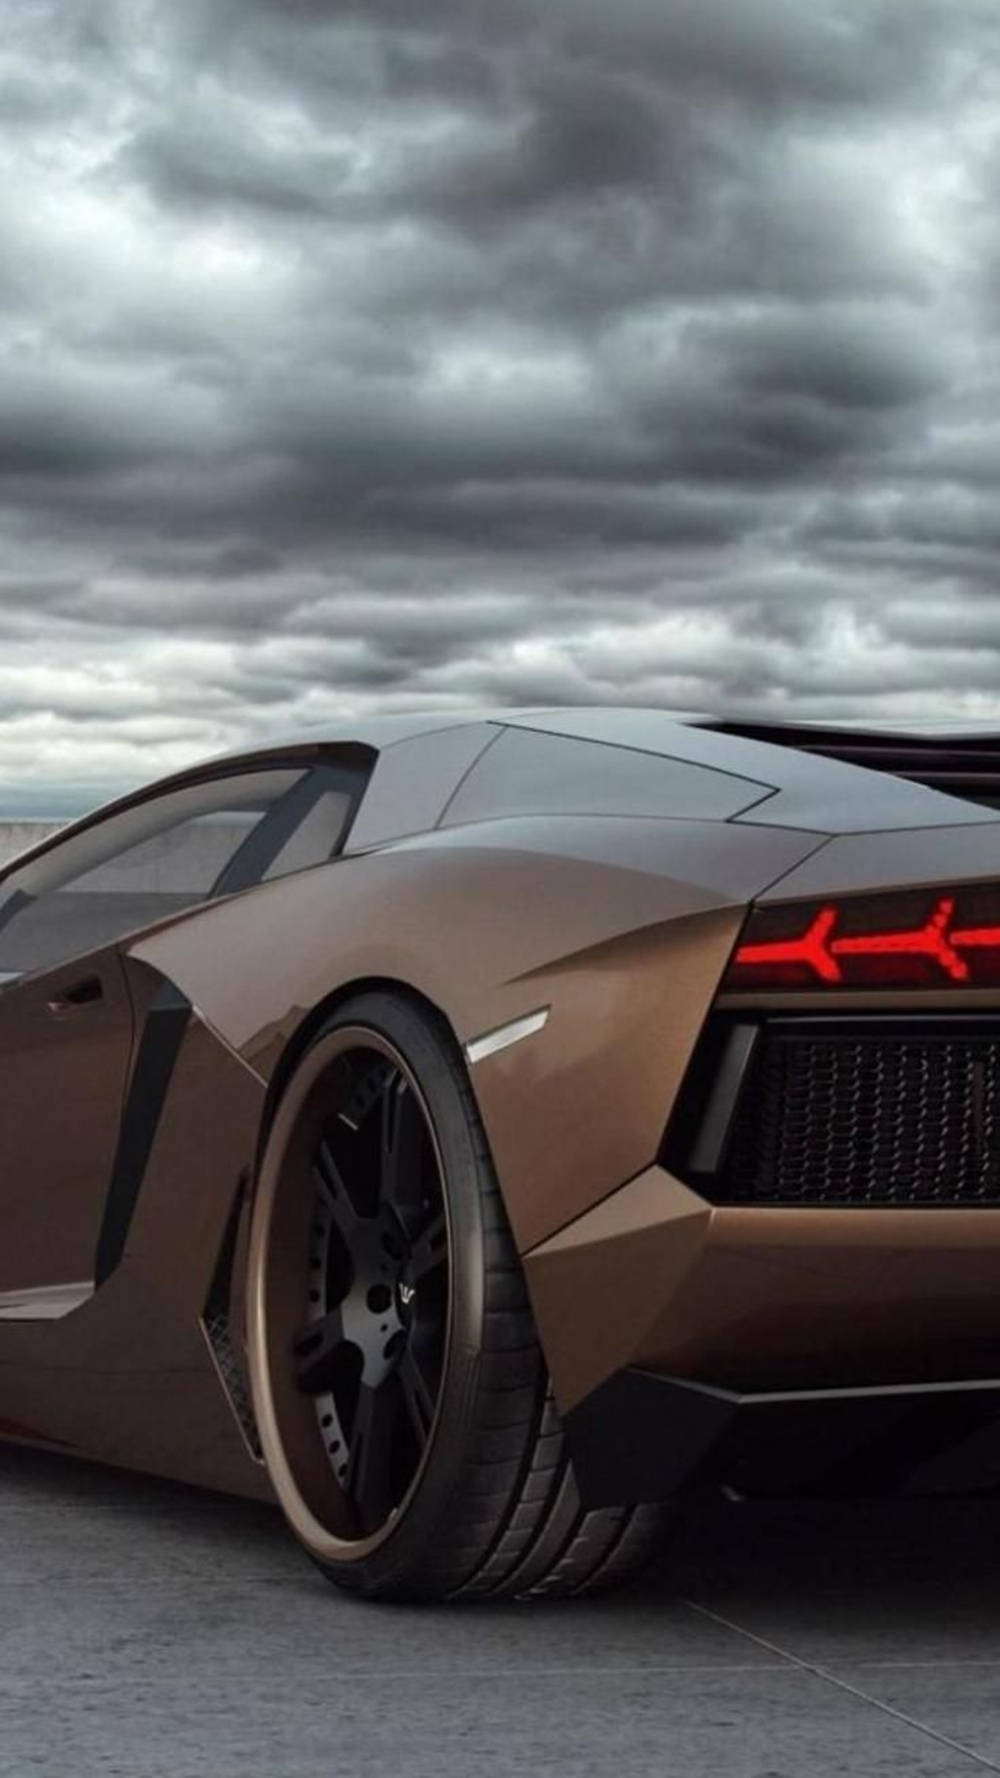 Adorable Image For Iphone Lamborghini Sreen Background